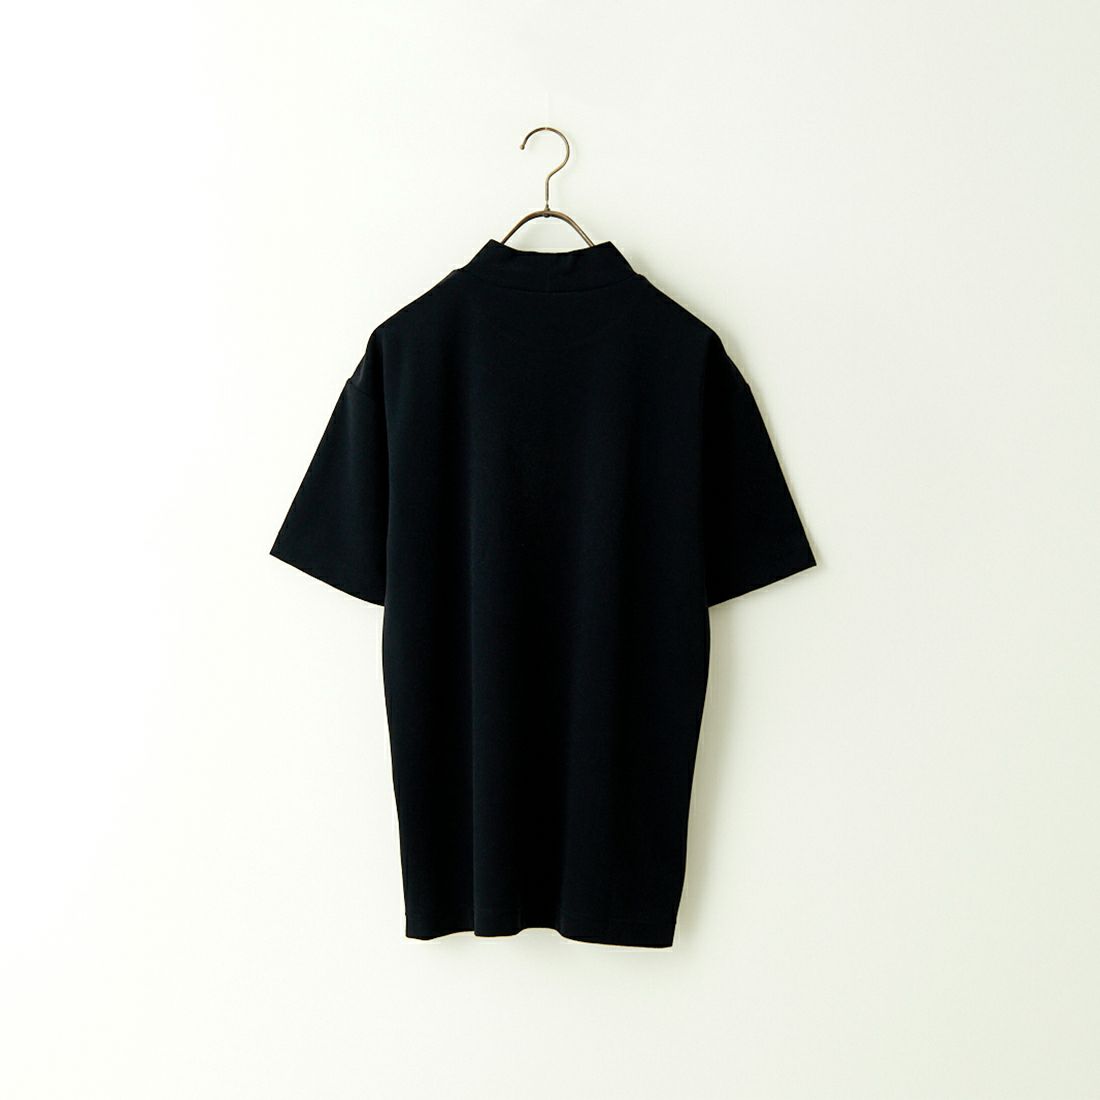 MARK & LONA [マークアンドロナ] モックネックTシャツ [MLM-4A-AA08] BLACK